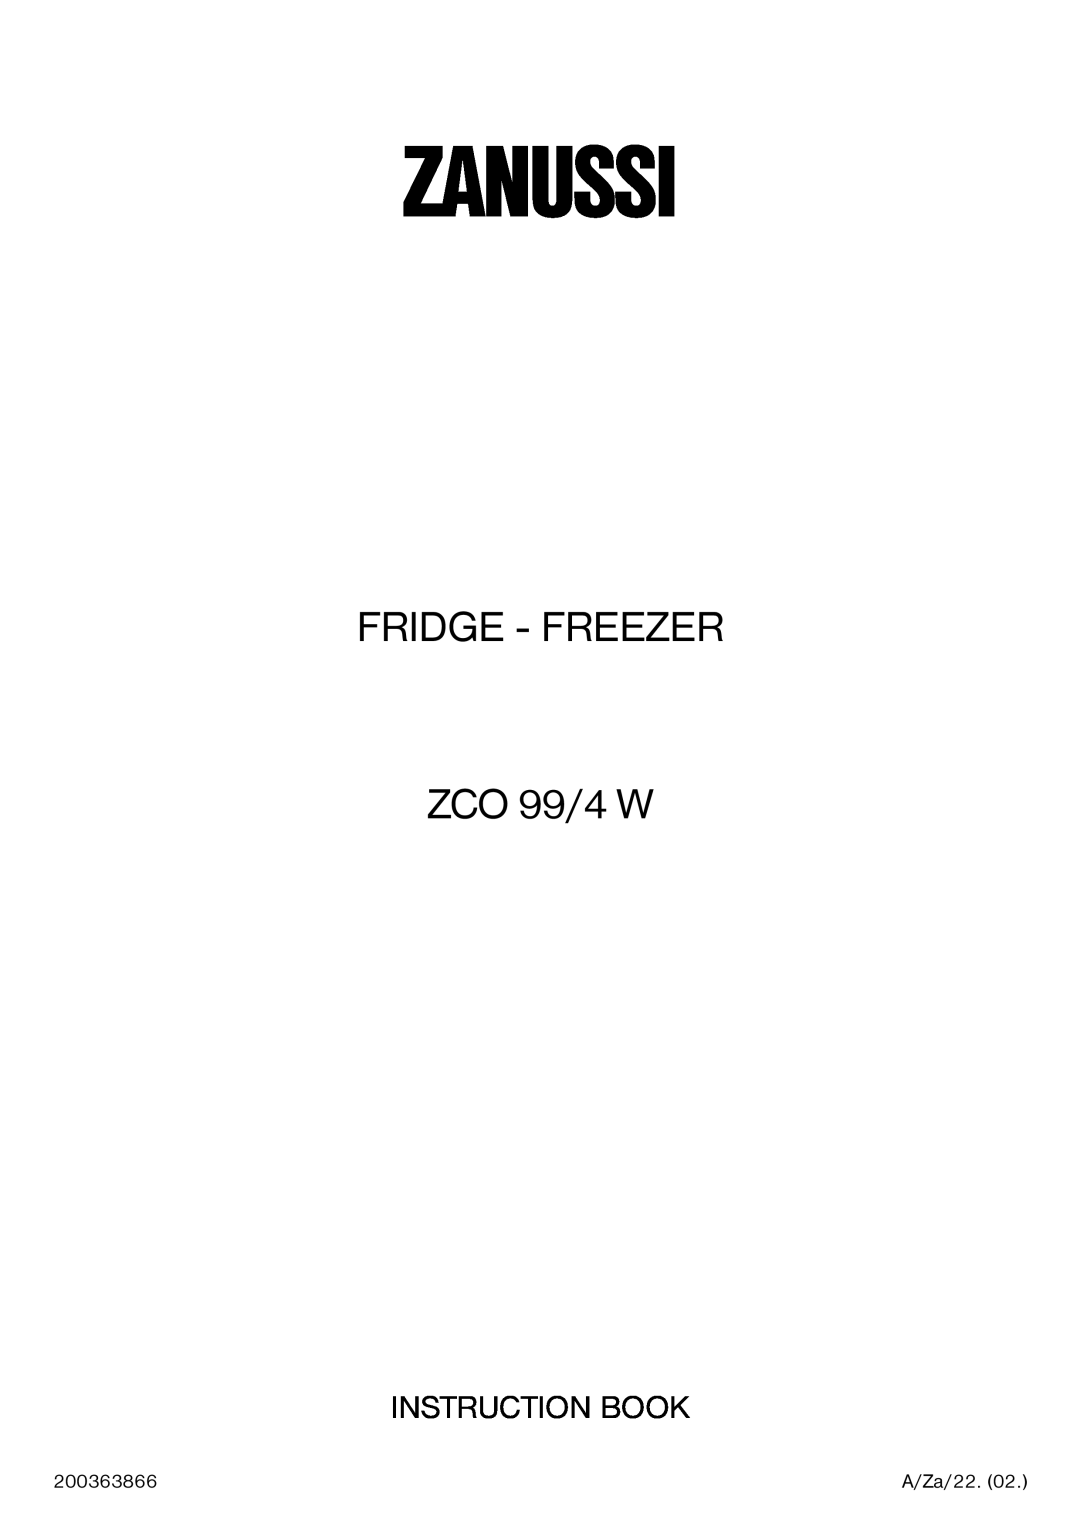 Zanussi manual Zanussi, FRIDGE - FREEZER ZCO 99/4 W, Instruction Book 